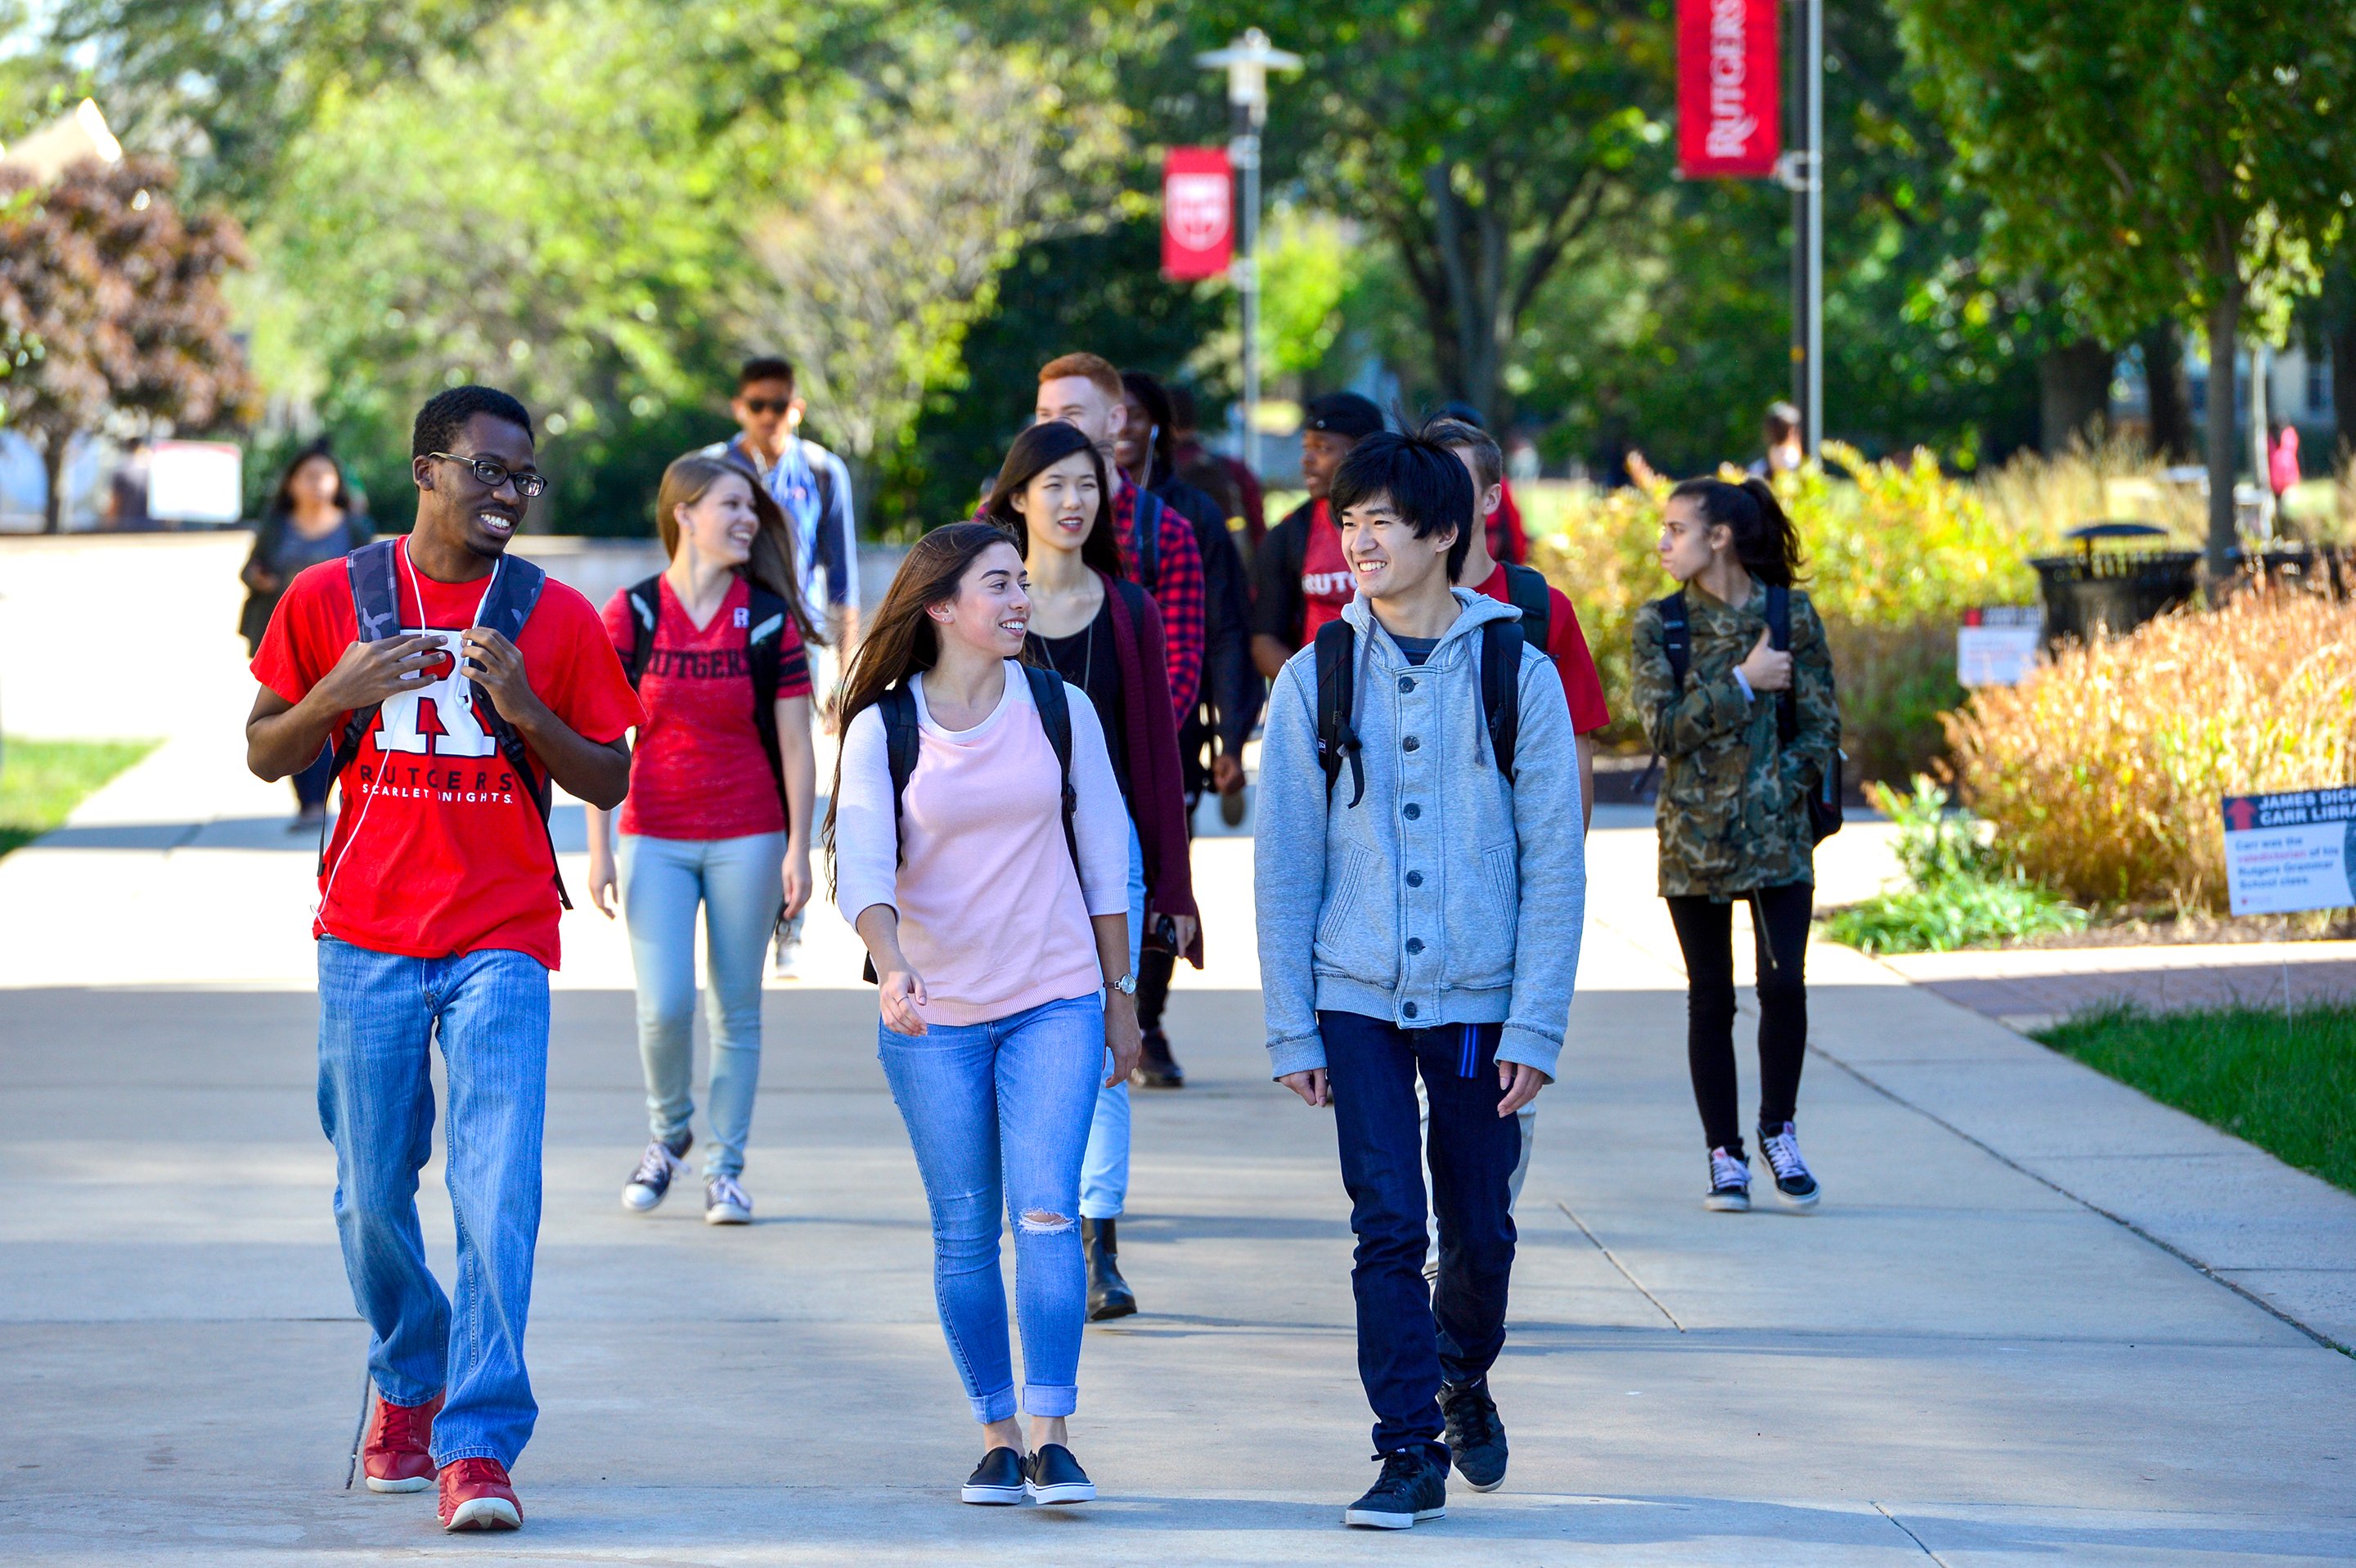 Students walking on campus at Rutgers University